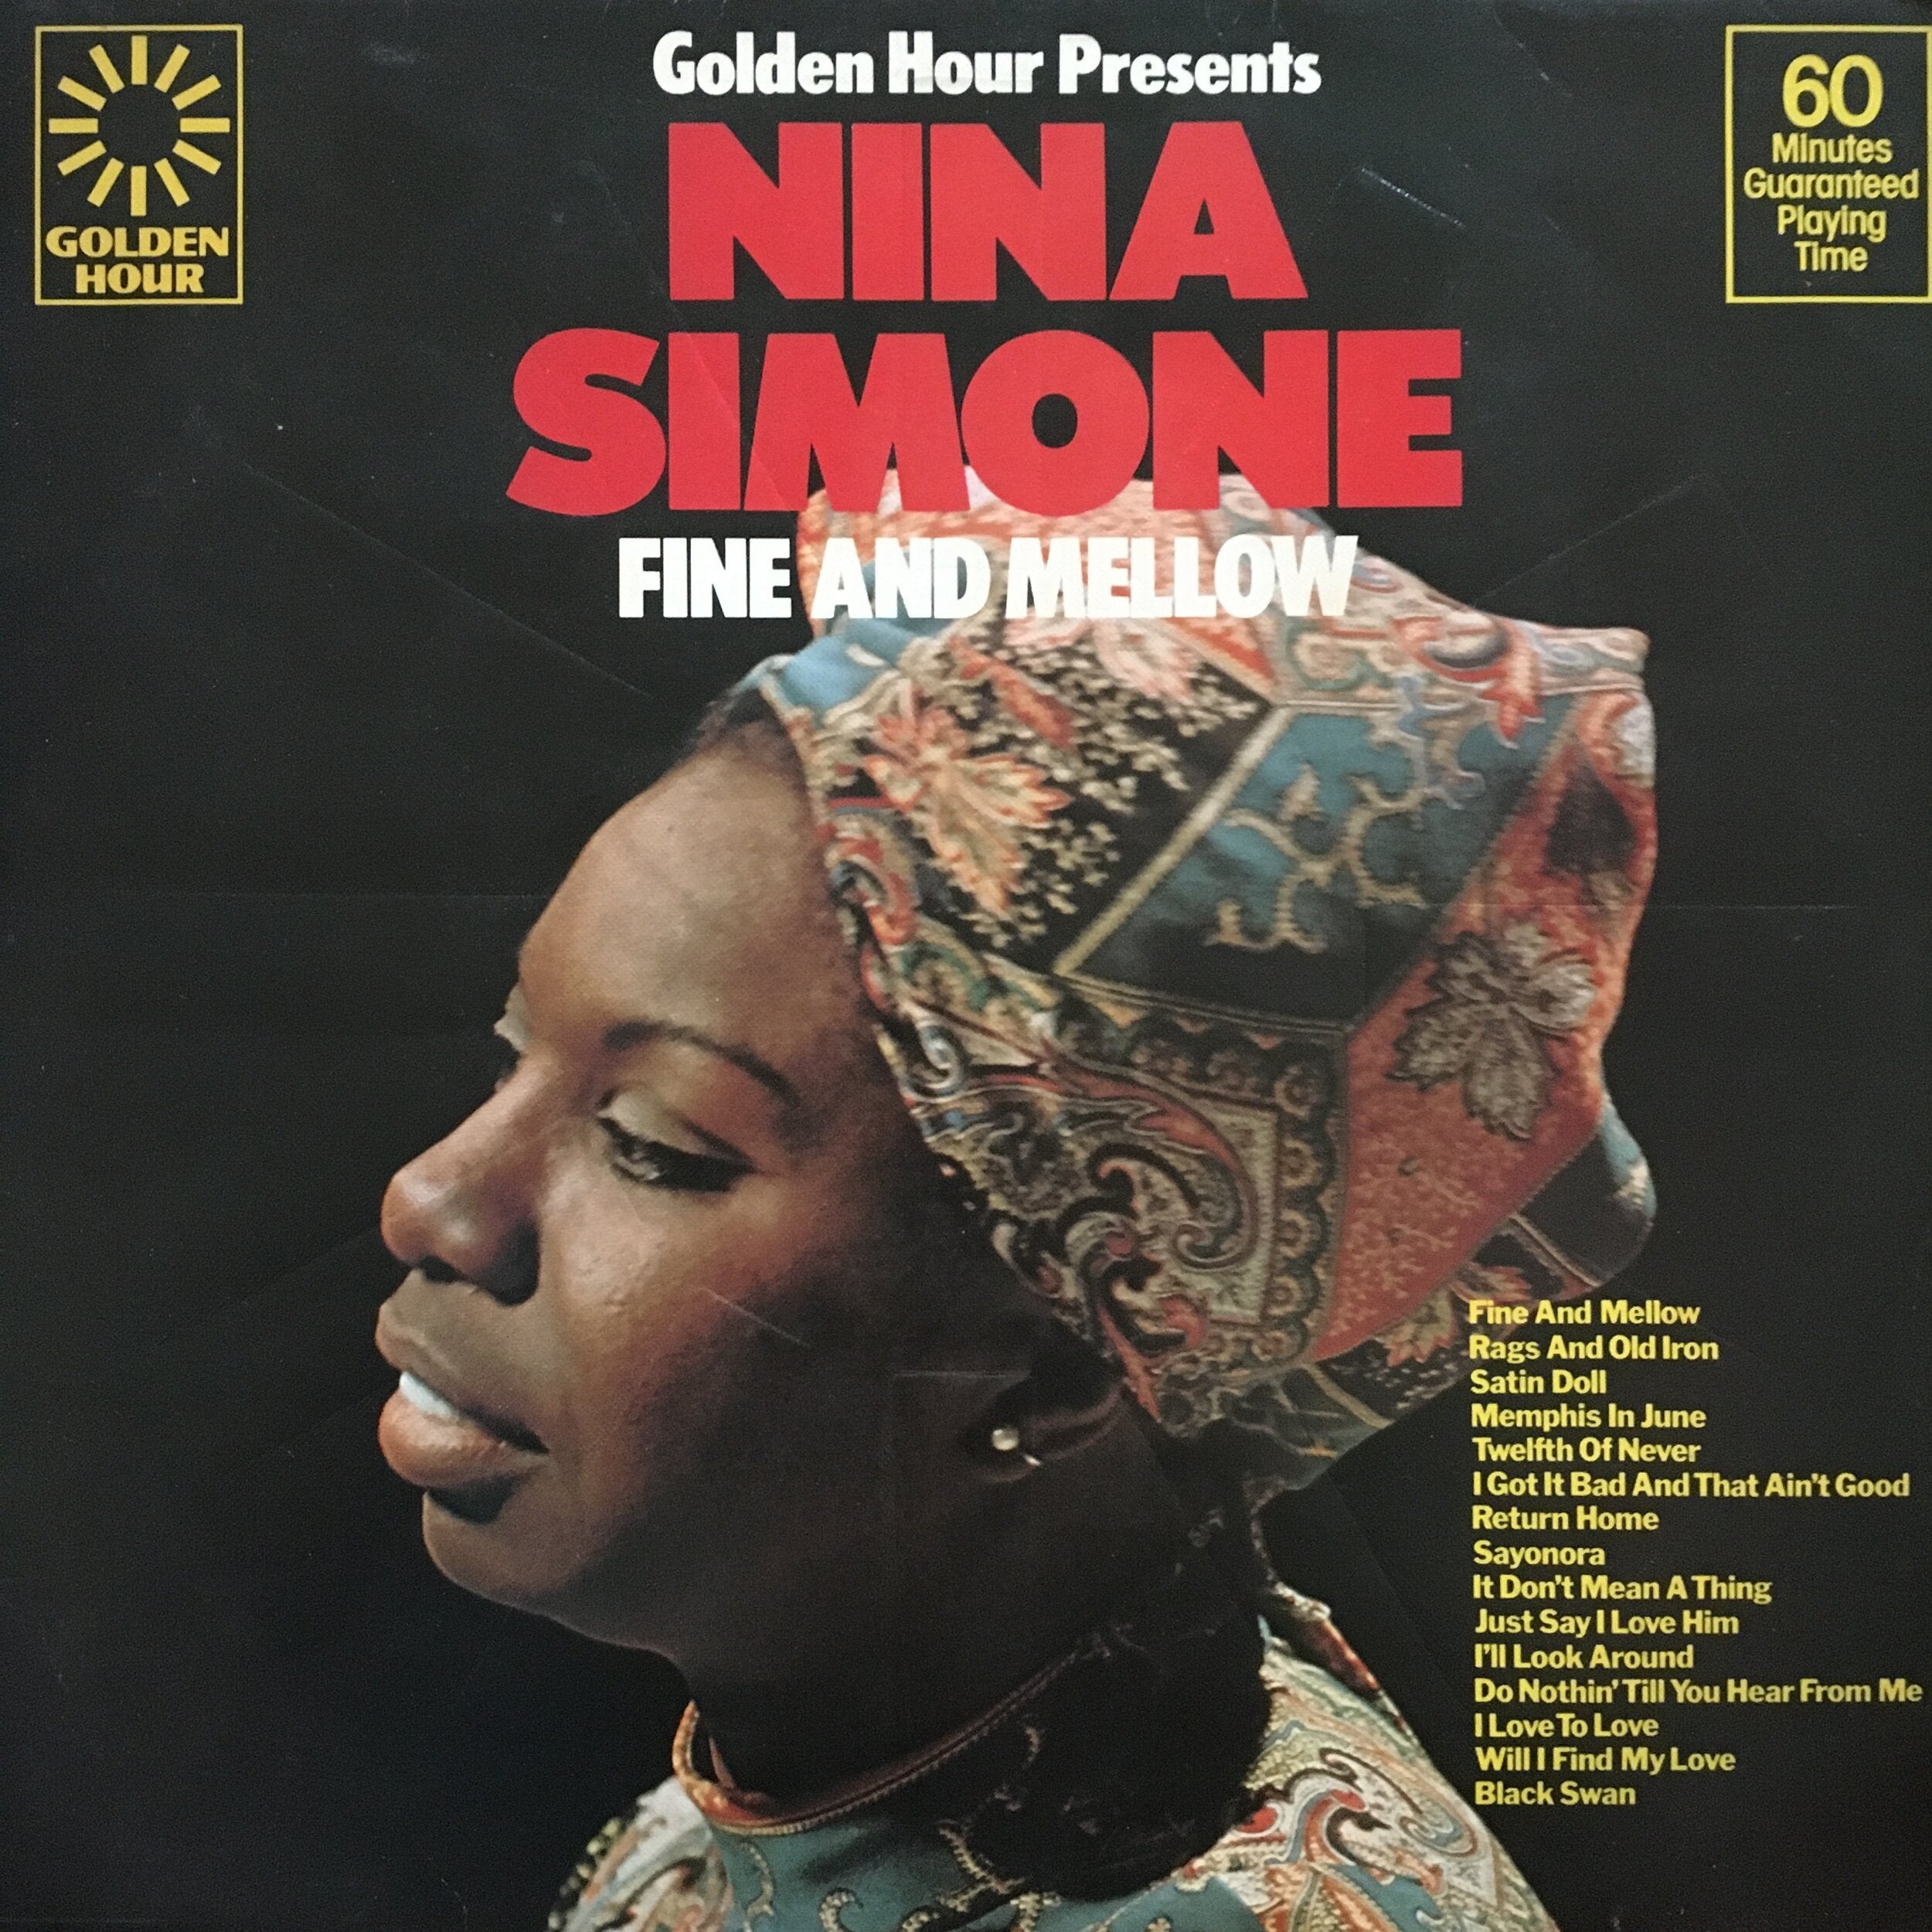 NINA SIMONE | Golden Hour Presents: Fine and Mellow